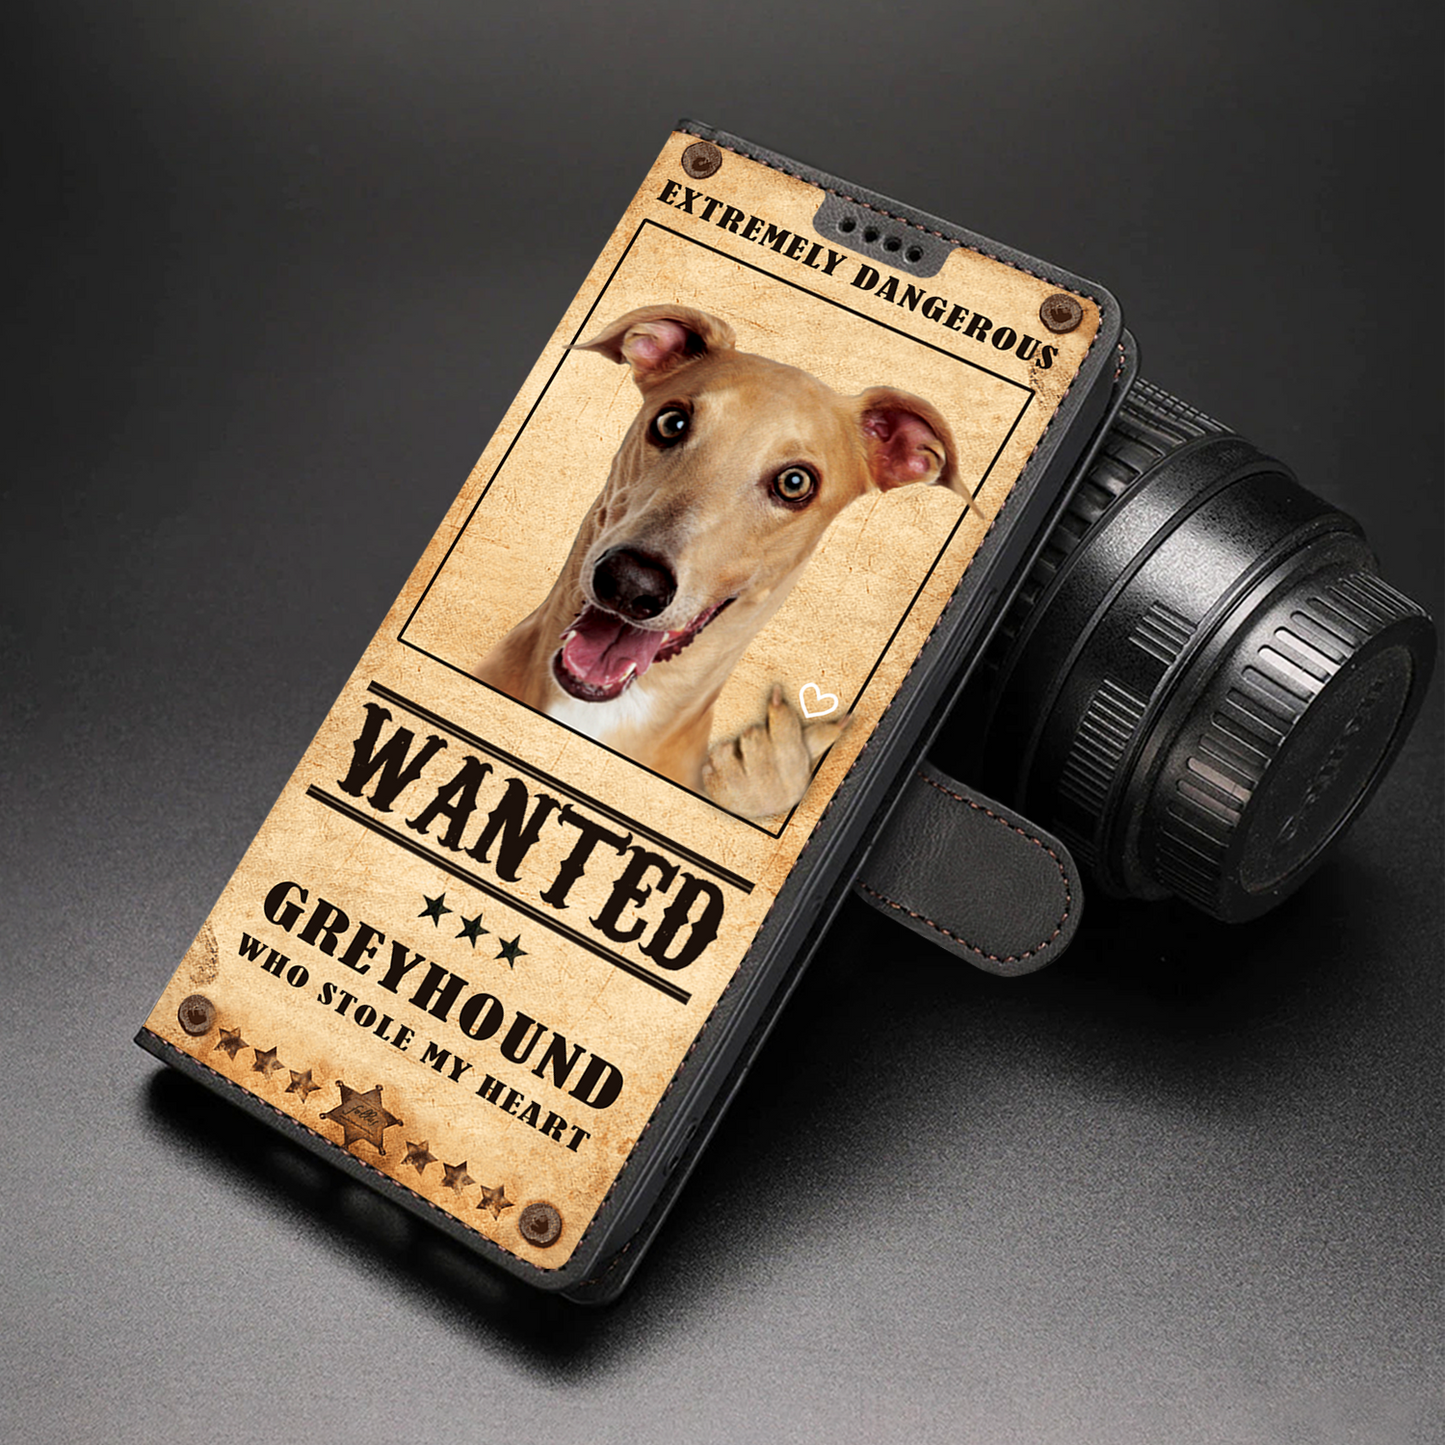 Heart Thief Greyhound - Love Inspired Wallet Phone Case V1